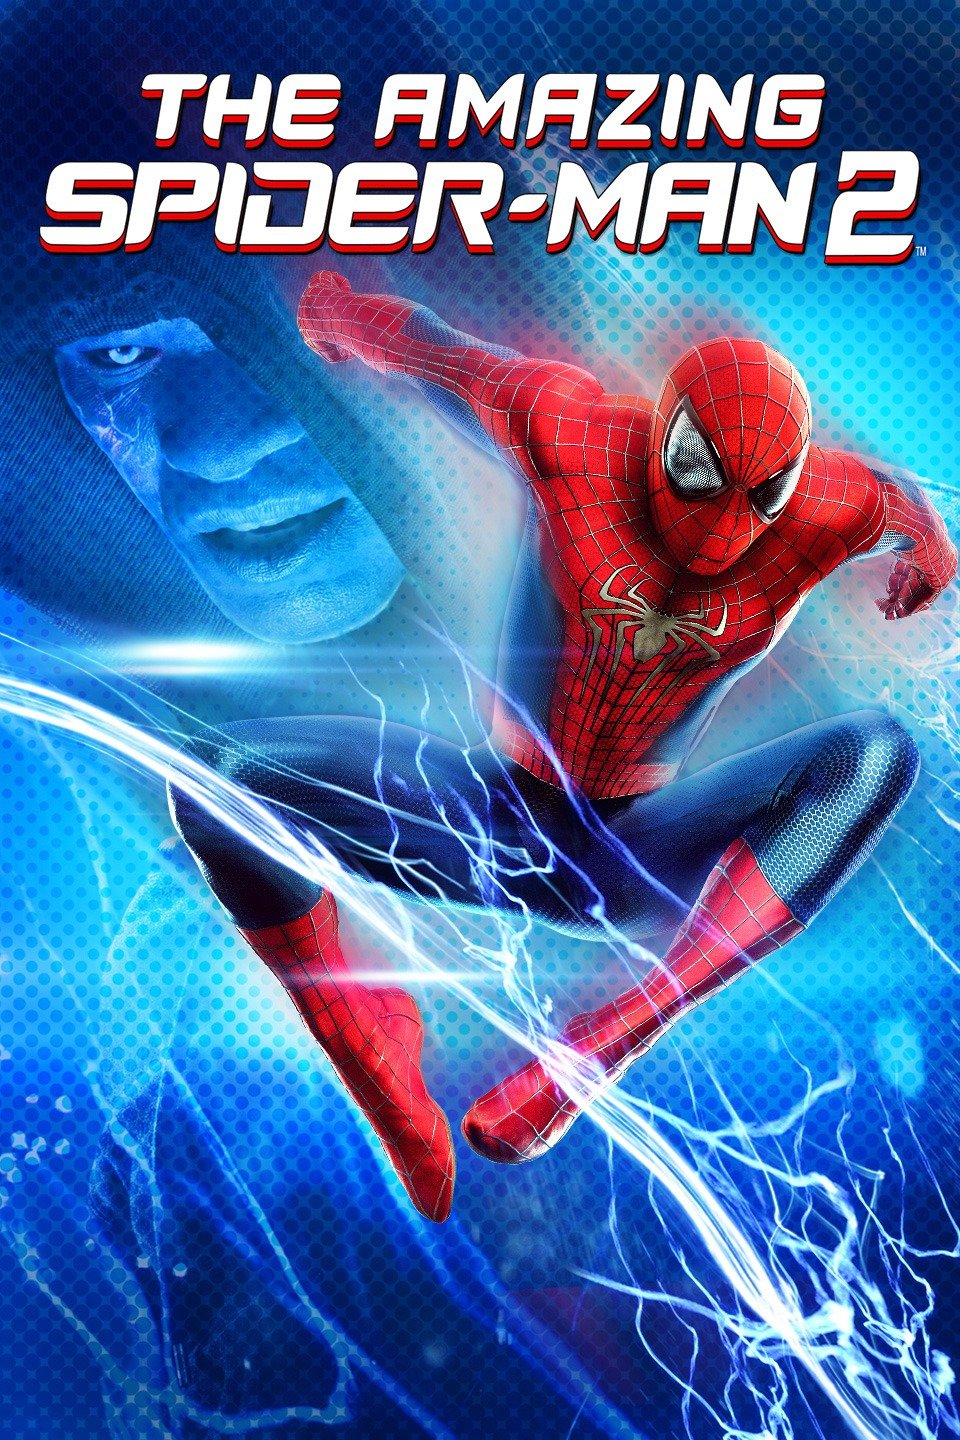 [MINI Super-HQ] The Amazing Spider-Man 2 (2014) ดิ อะเมซิ่ง สไปเดอร์-แมน: ผงาดอสูรกายสายฟ้า [1080p] [พากย์ไทย 5.1 + อังกฤษ DTS] [BluRay.DTS.x264] [บรรยายไทย + อังกฤษ] [เสียงไทย + ซับไทย]